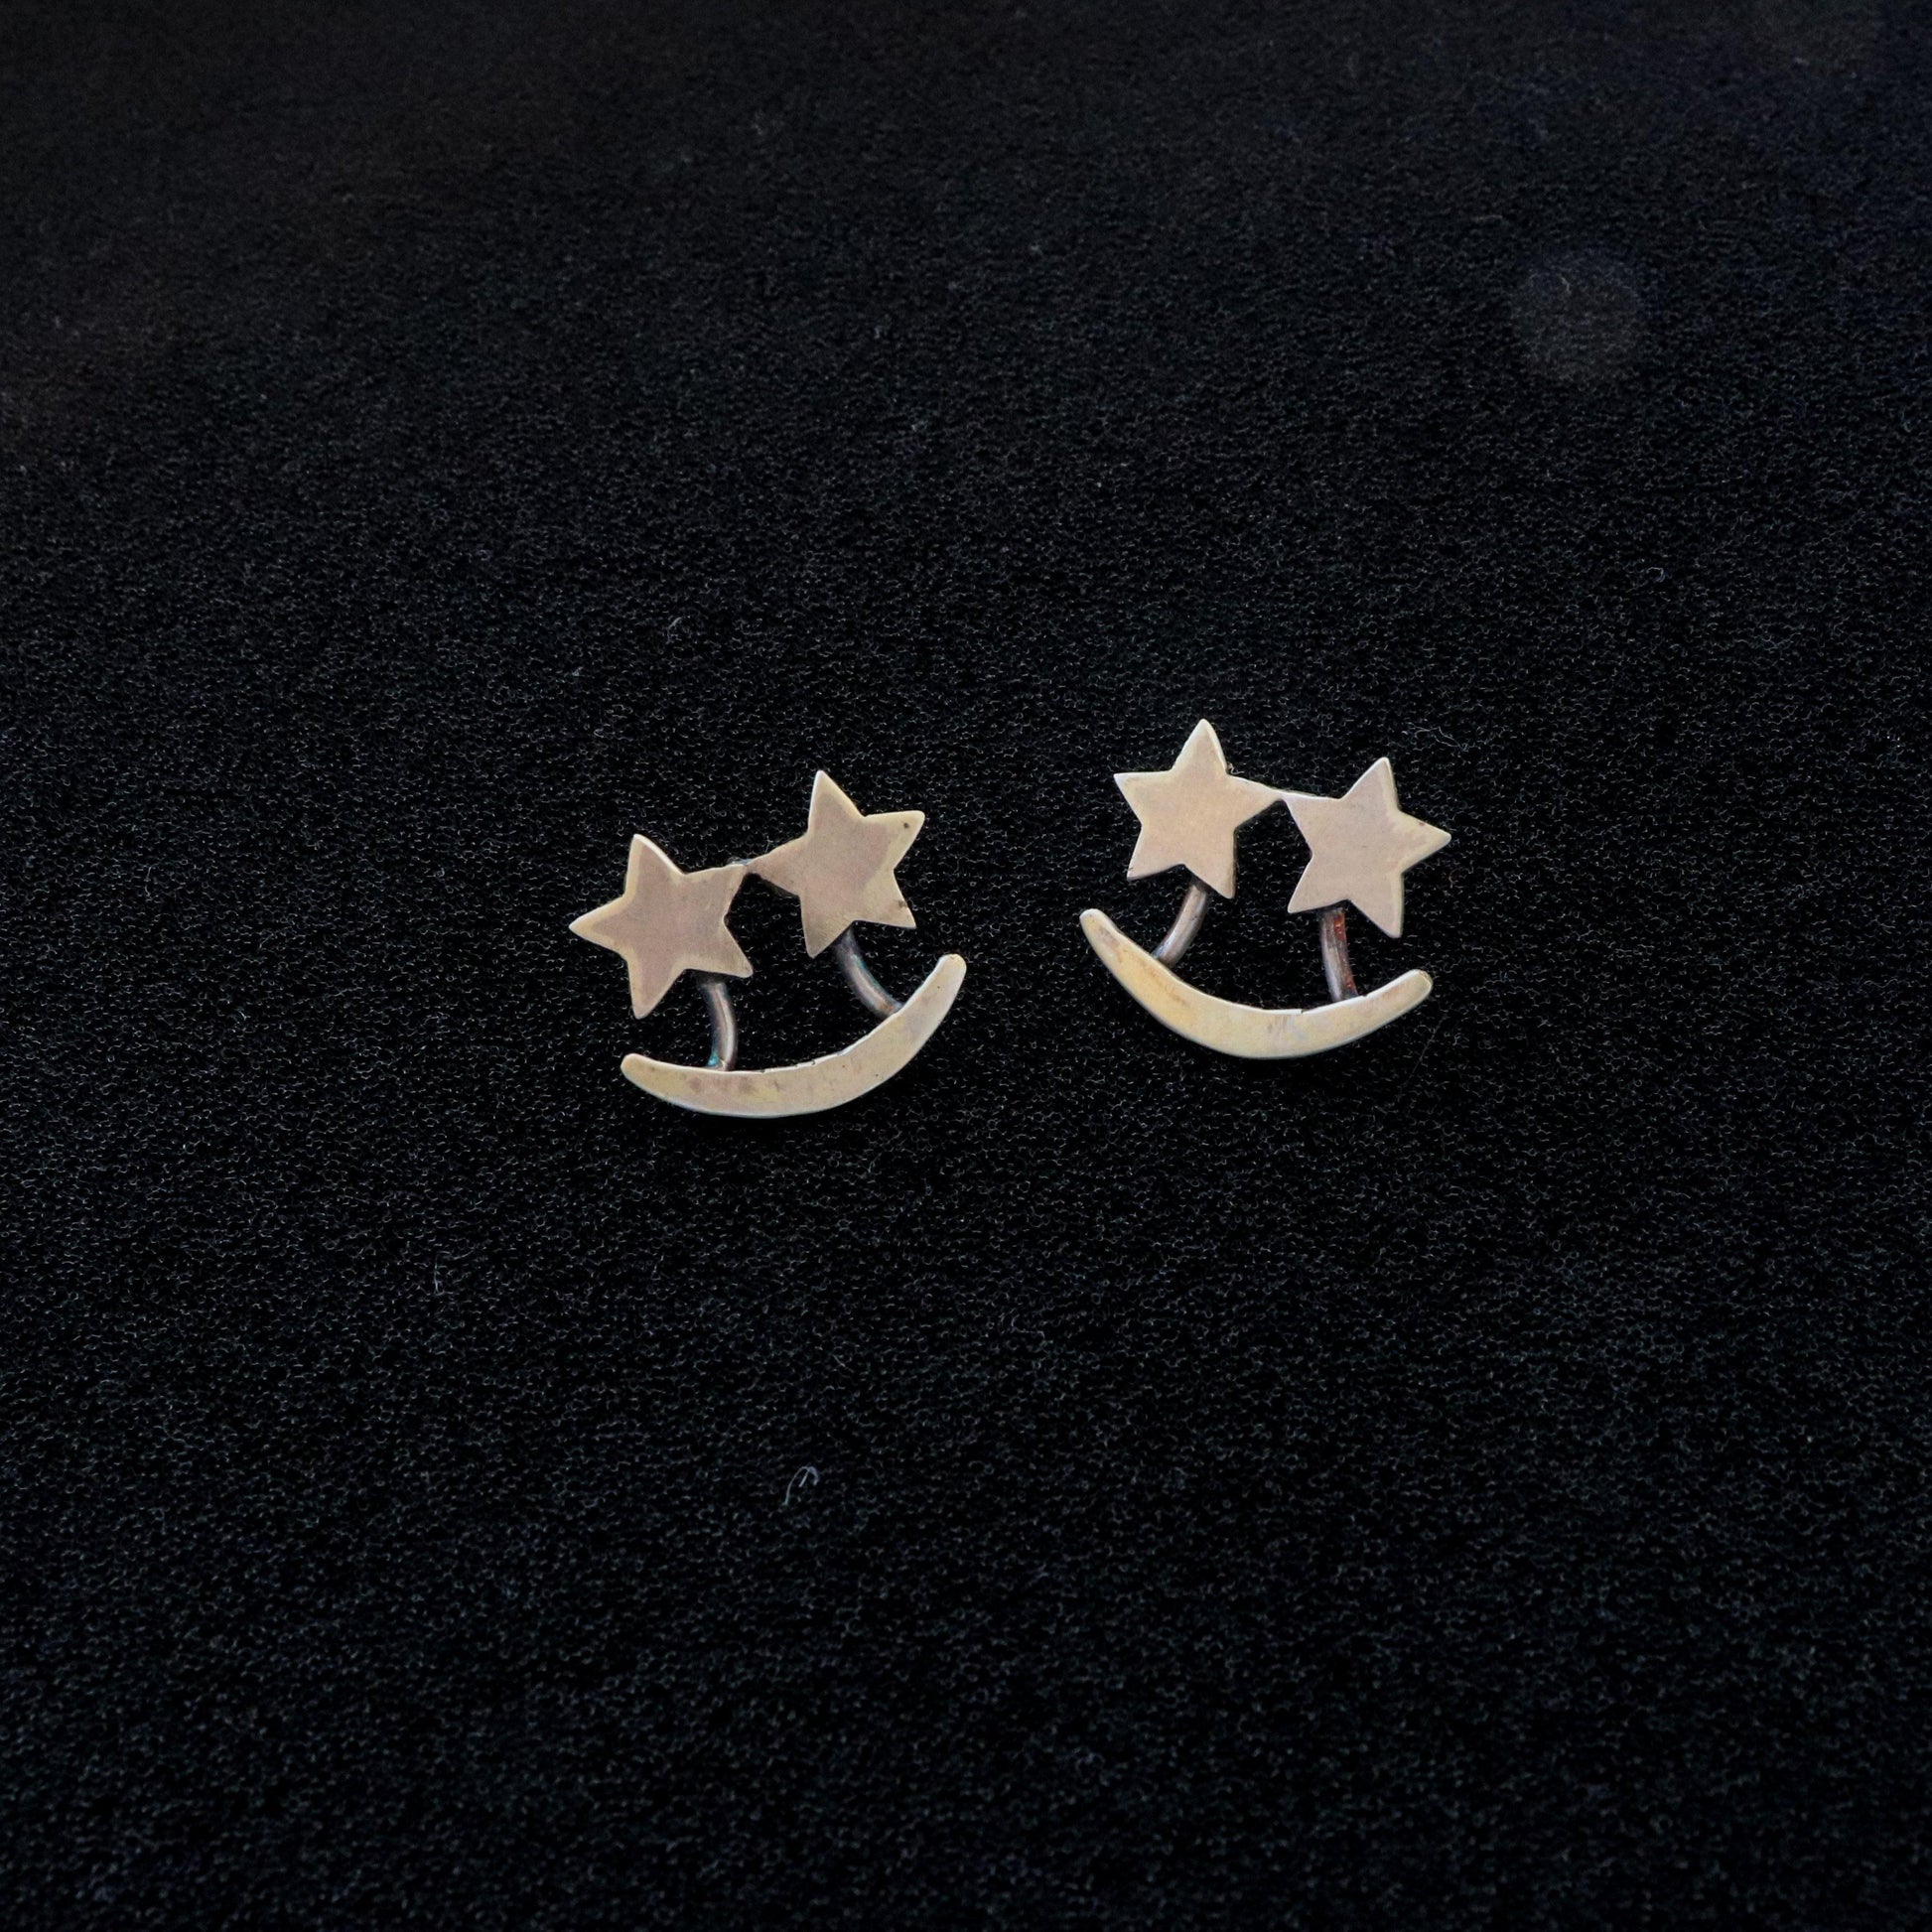 Star Emoji Earrings - Smith Jewels